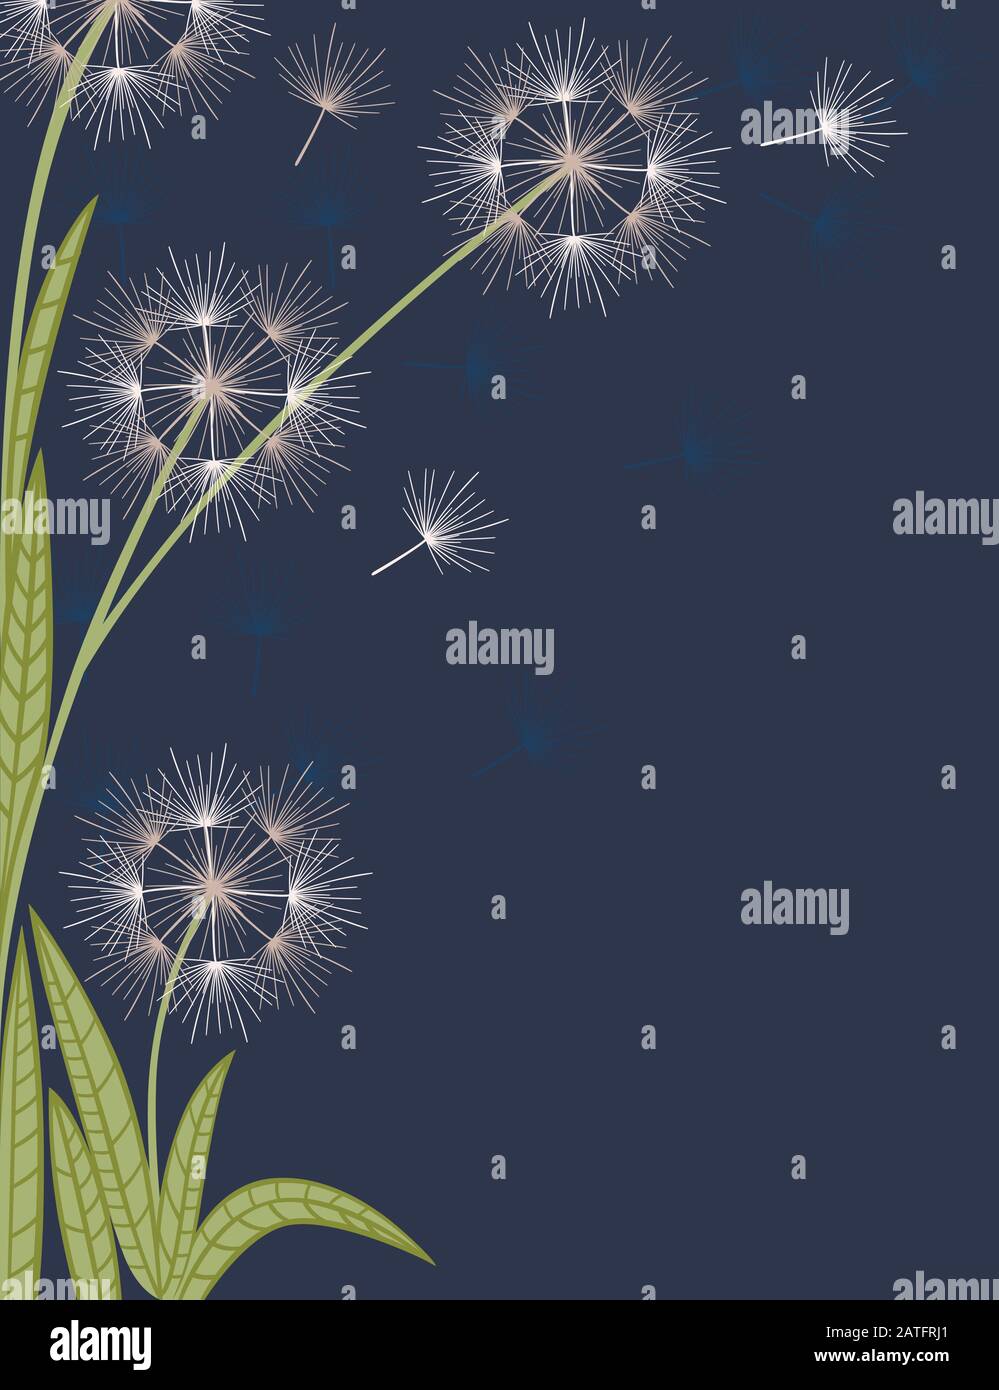 Dandelions flowers with flying seeds on dark blue background flat vector vertical illustration Stock Vector